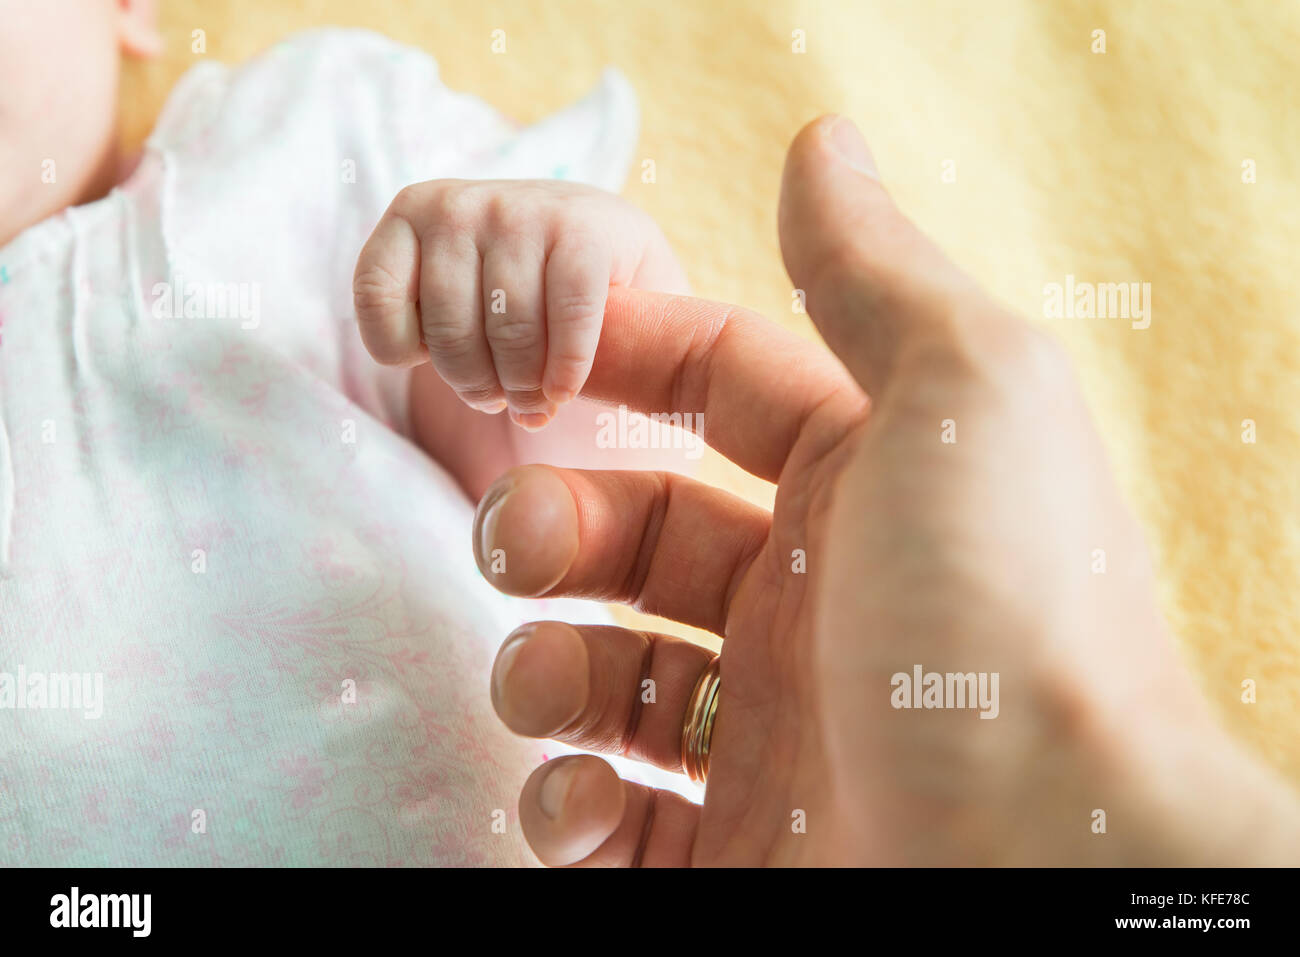 Newborn baby hand holding dads finger Stock Photo by ©Lakschmi 99674088